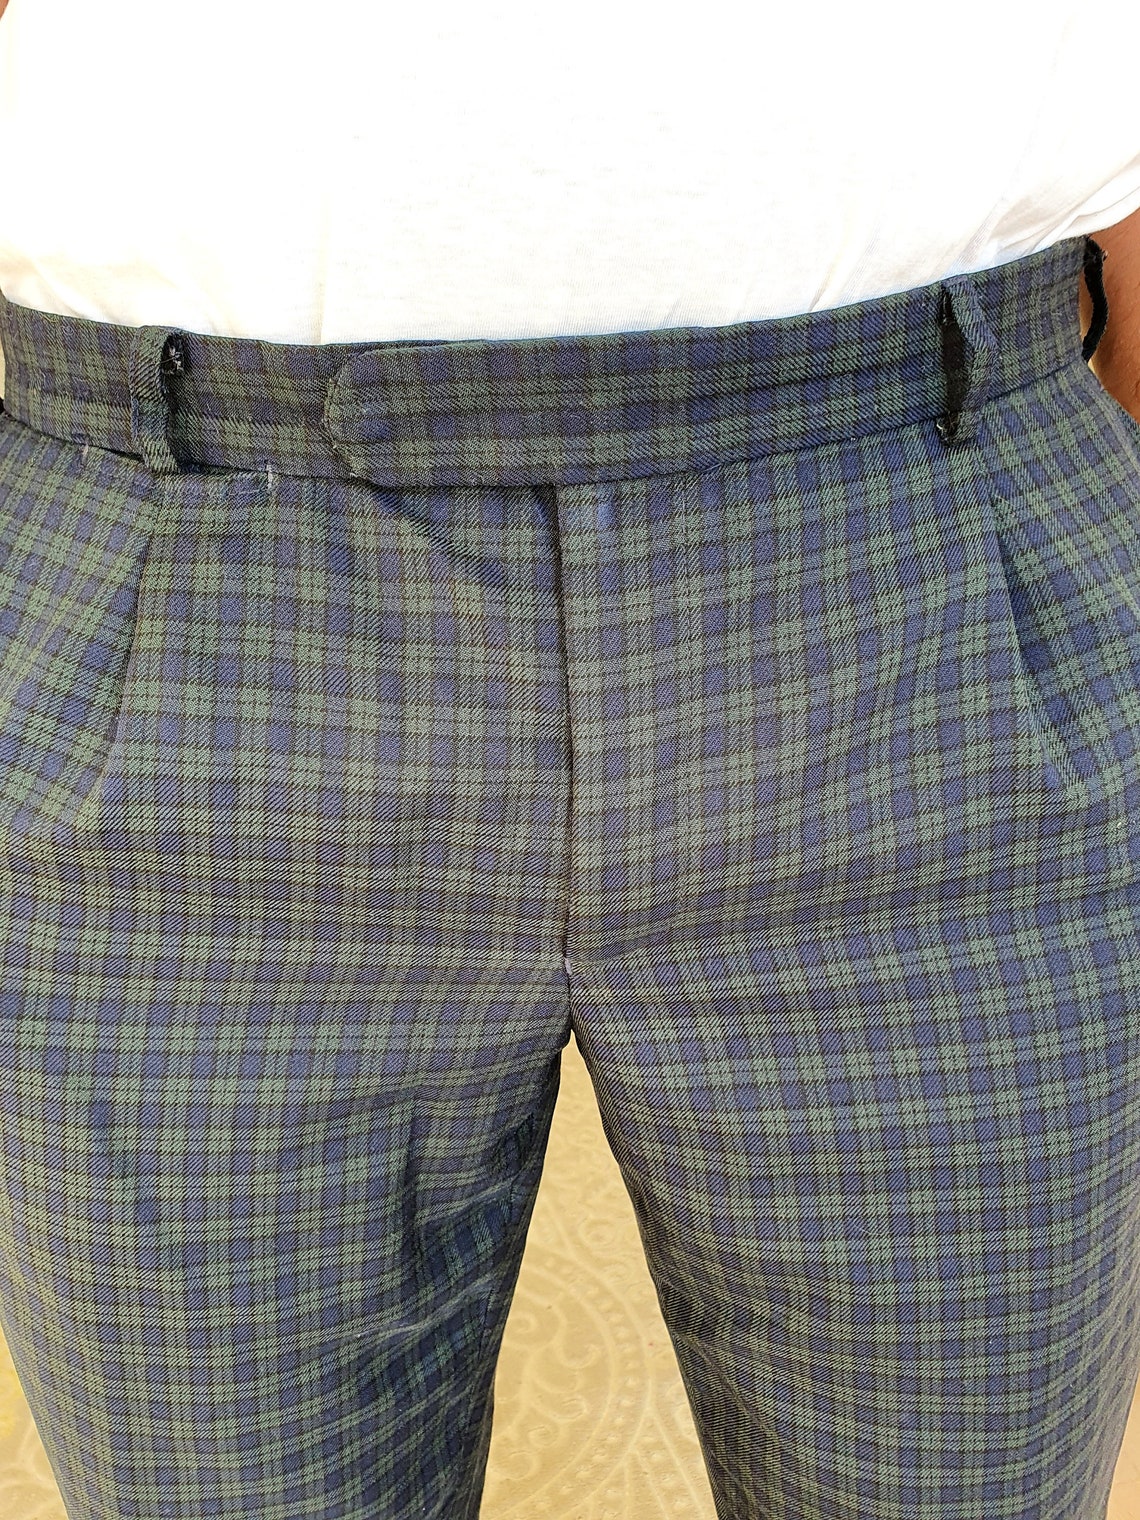 Blue Plaid Pants XL Retro Pants Mens Pants Checkered Pants | Etsy